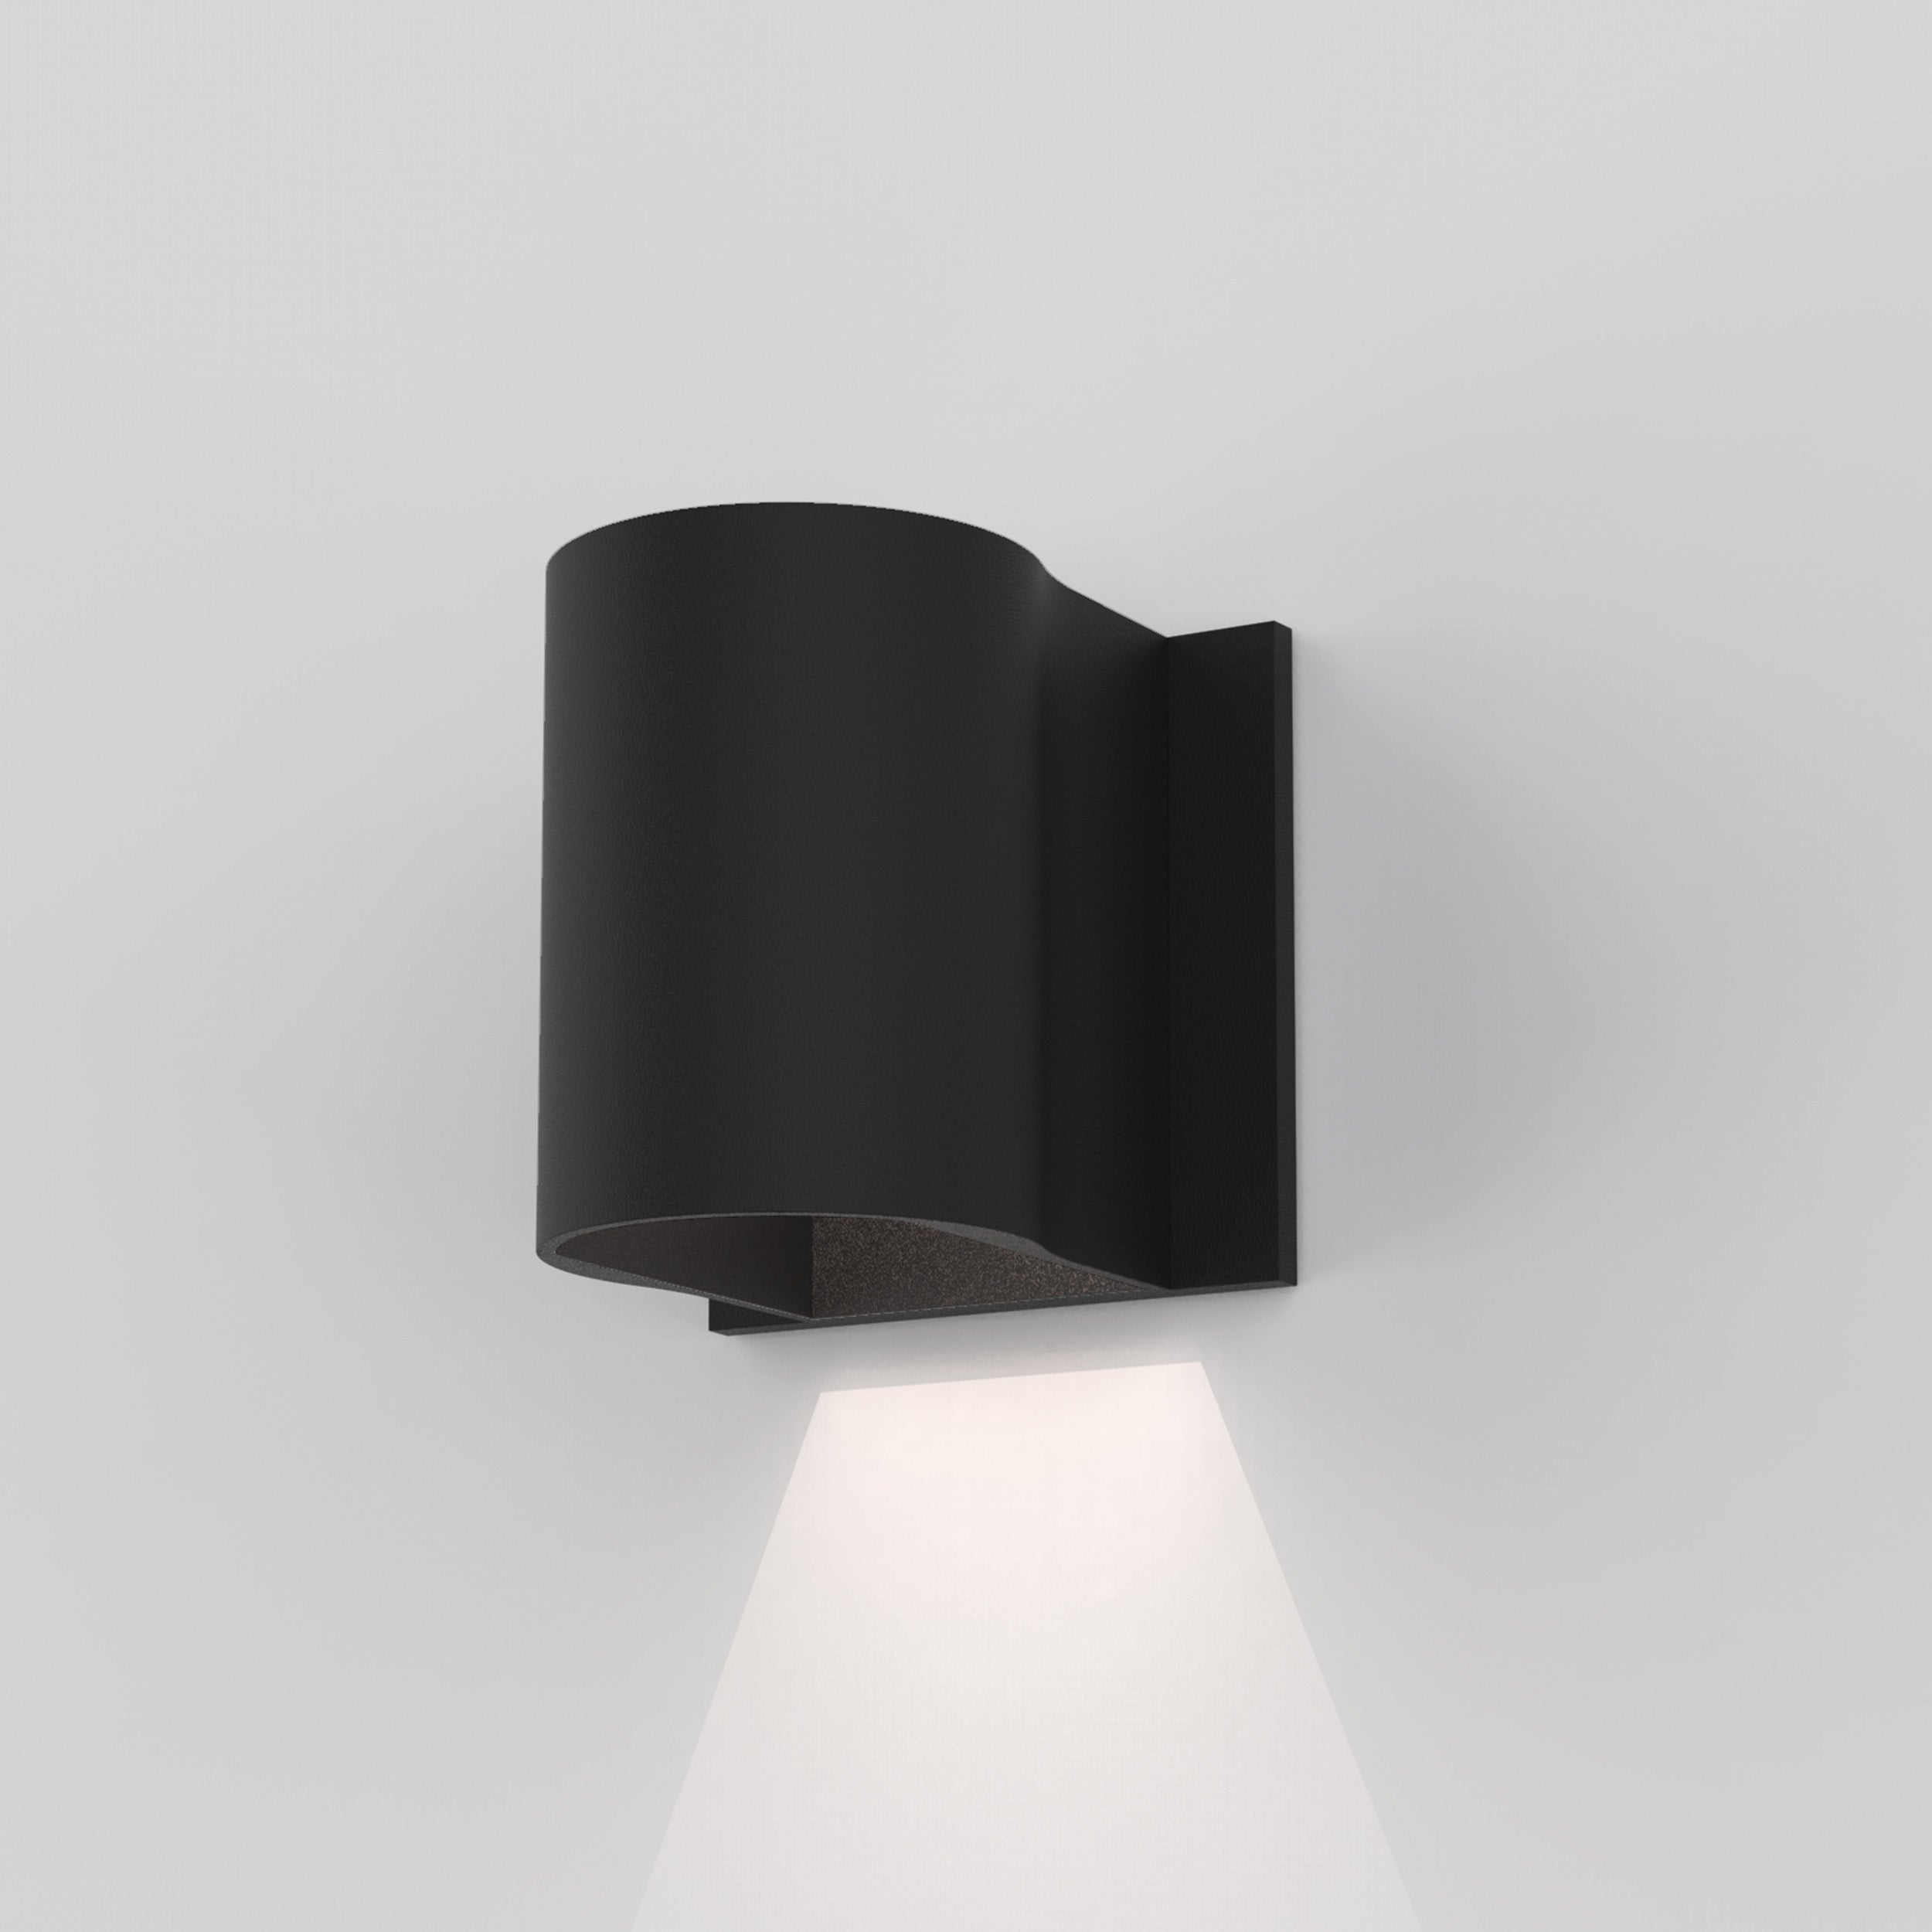 Astro Lighting Dunbar Wall Light Fixtures Astro Lighting 4.17x4.33x4.33 Textured Black Yes (Integral), High Power LED